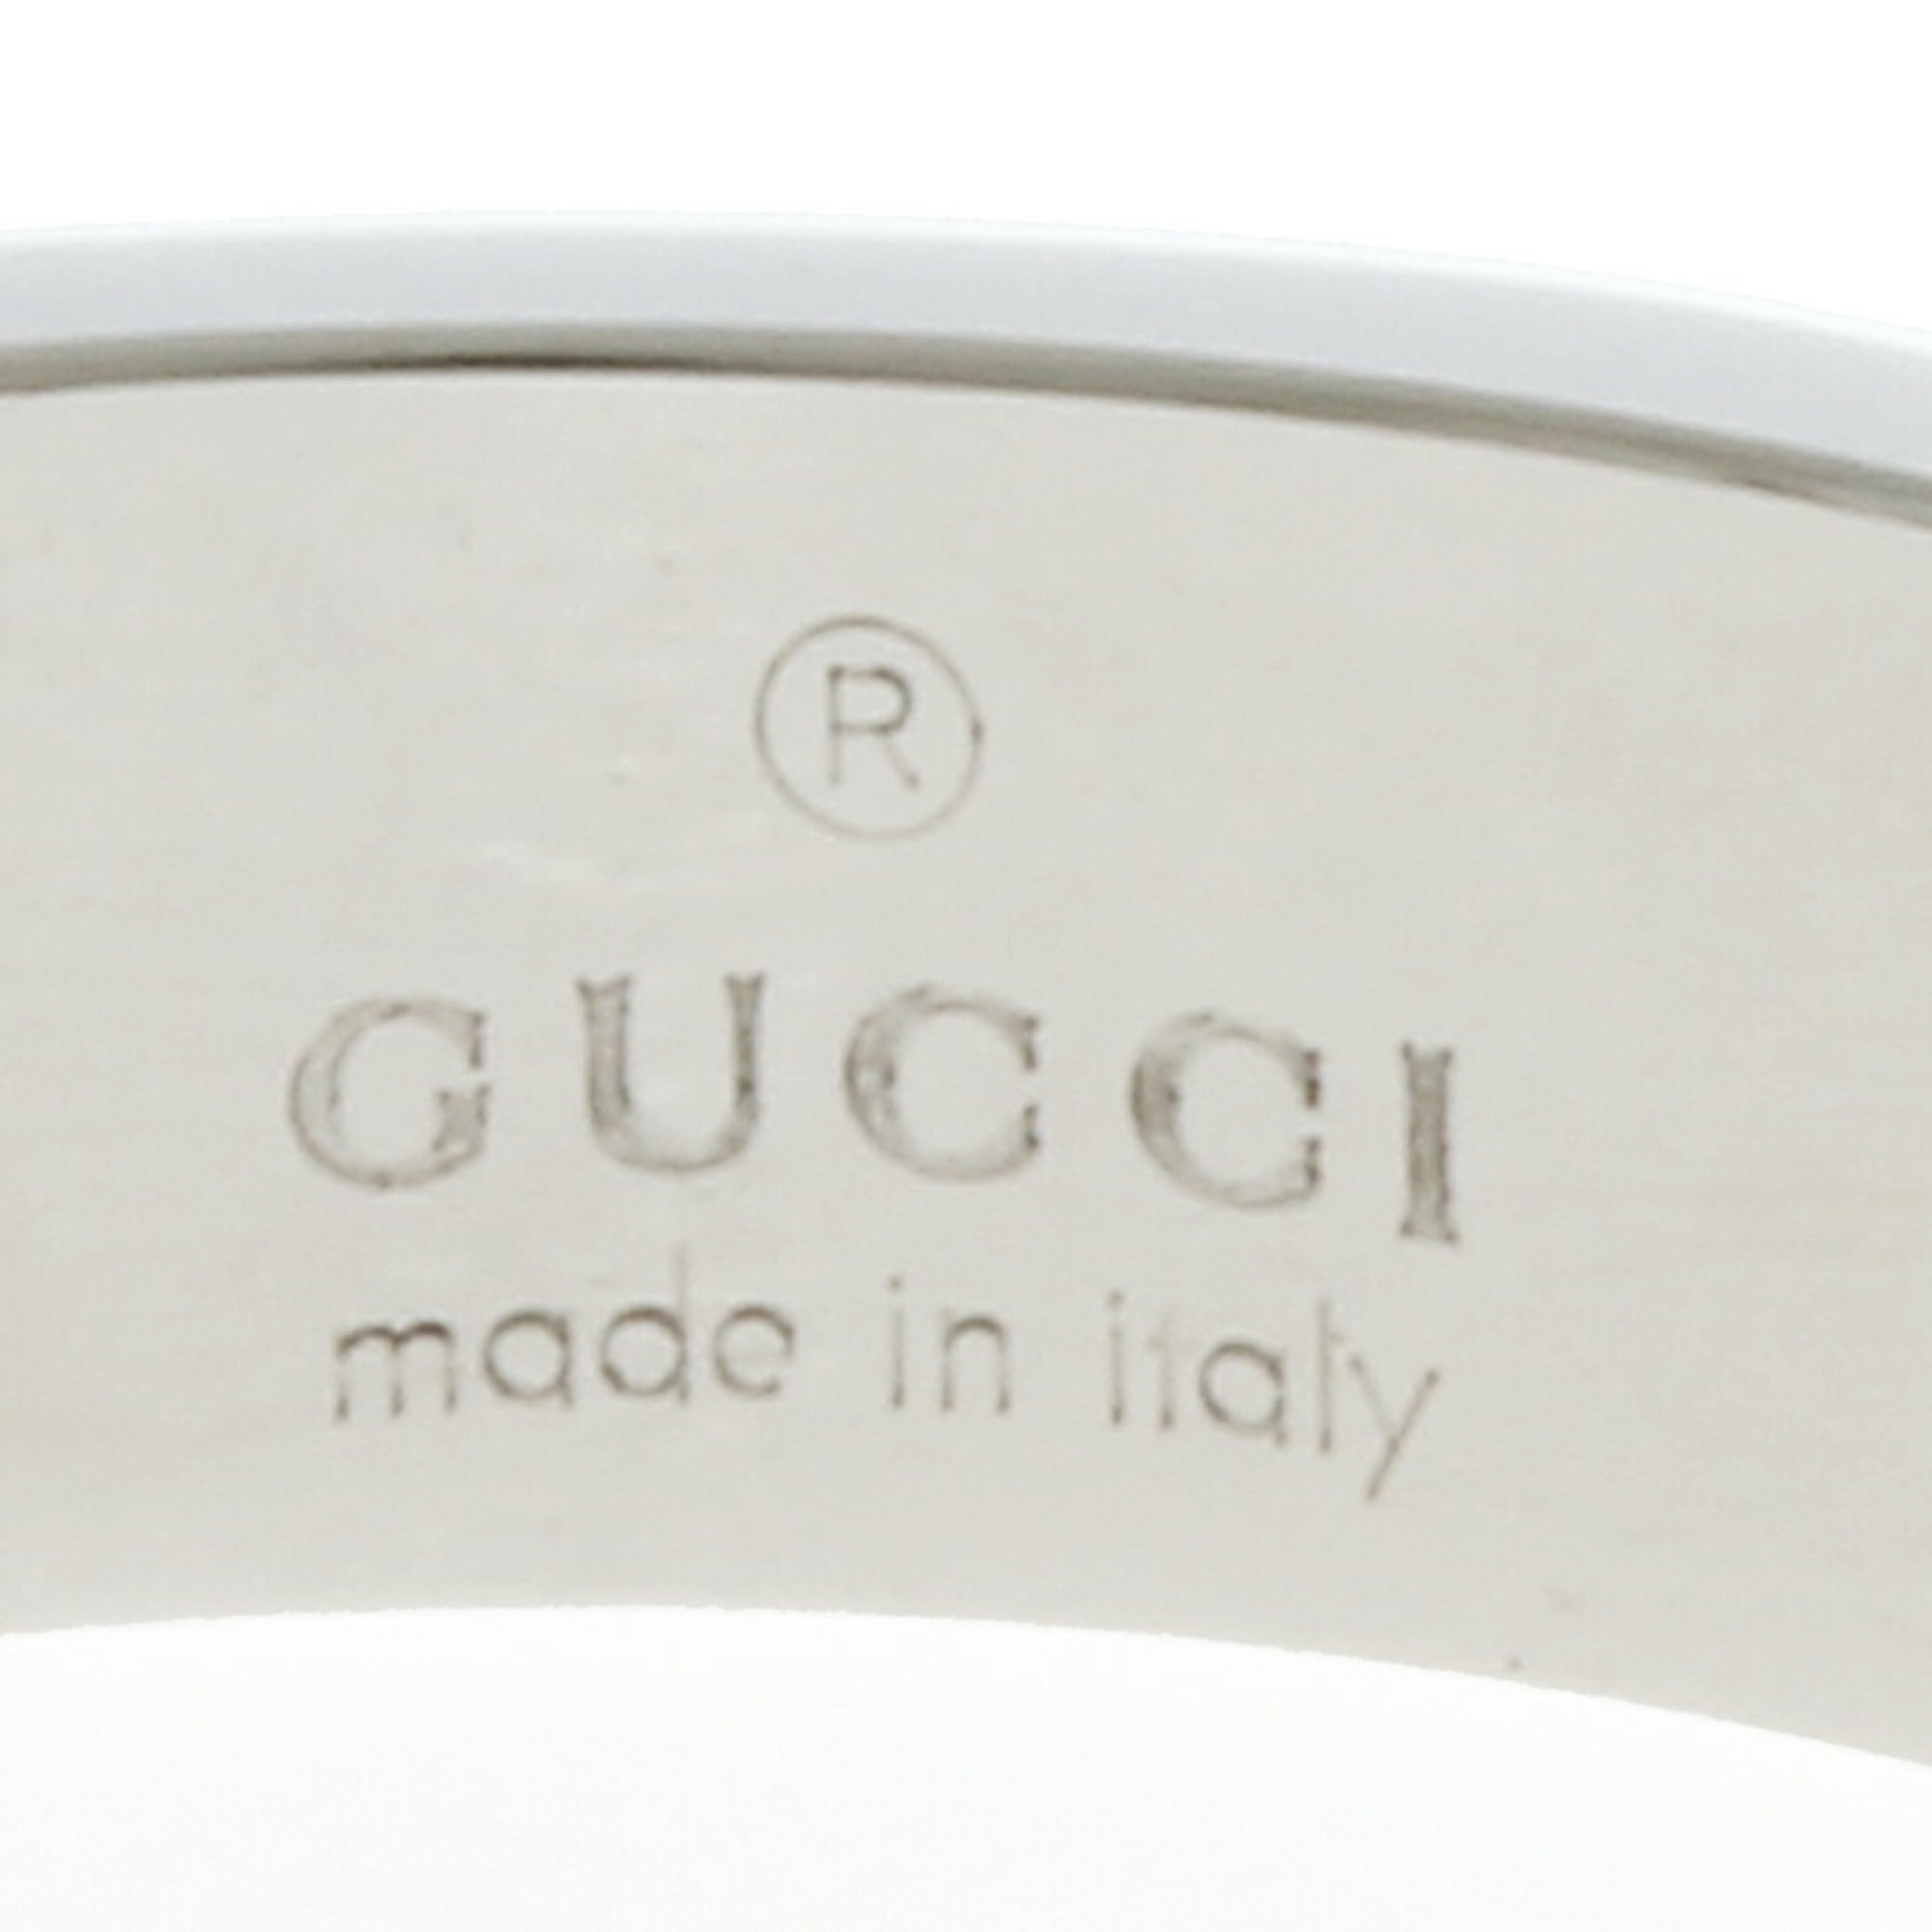 Gucci Ring No. 8.5 18K K18 White Gold Ladies GUCCI